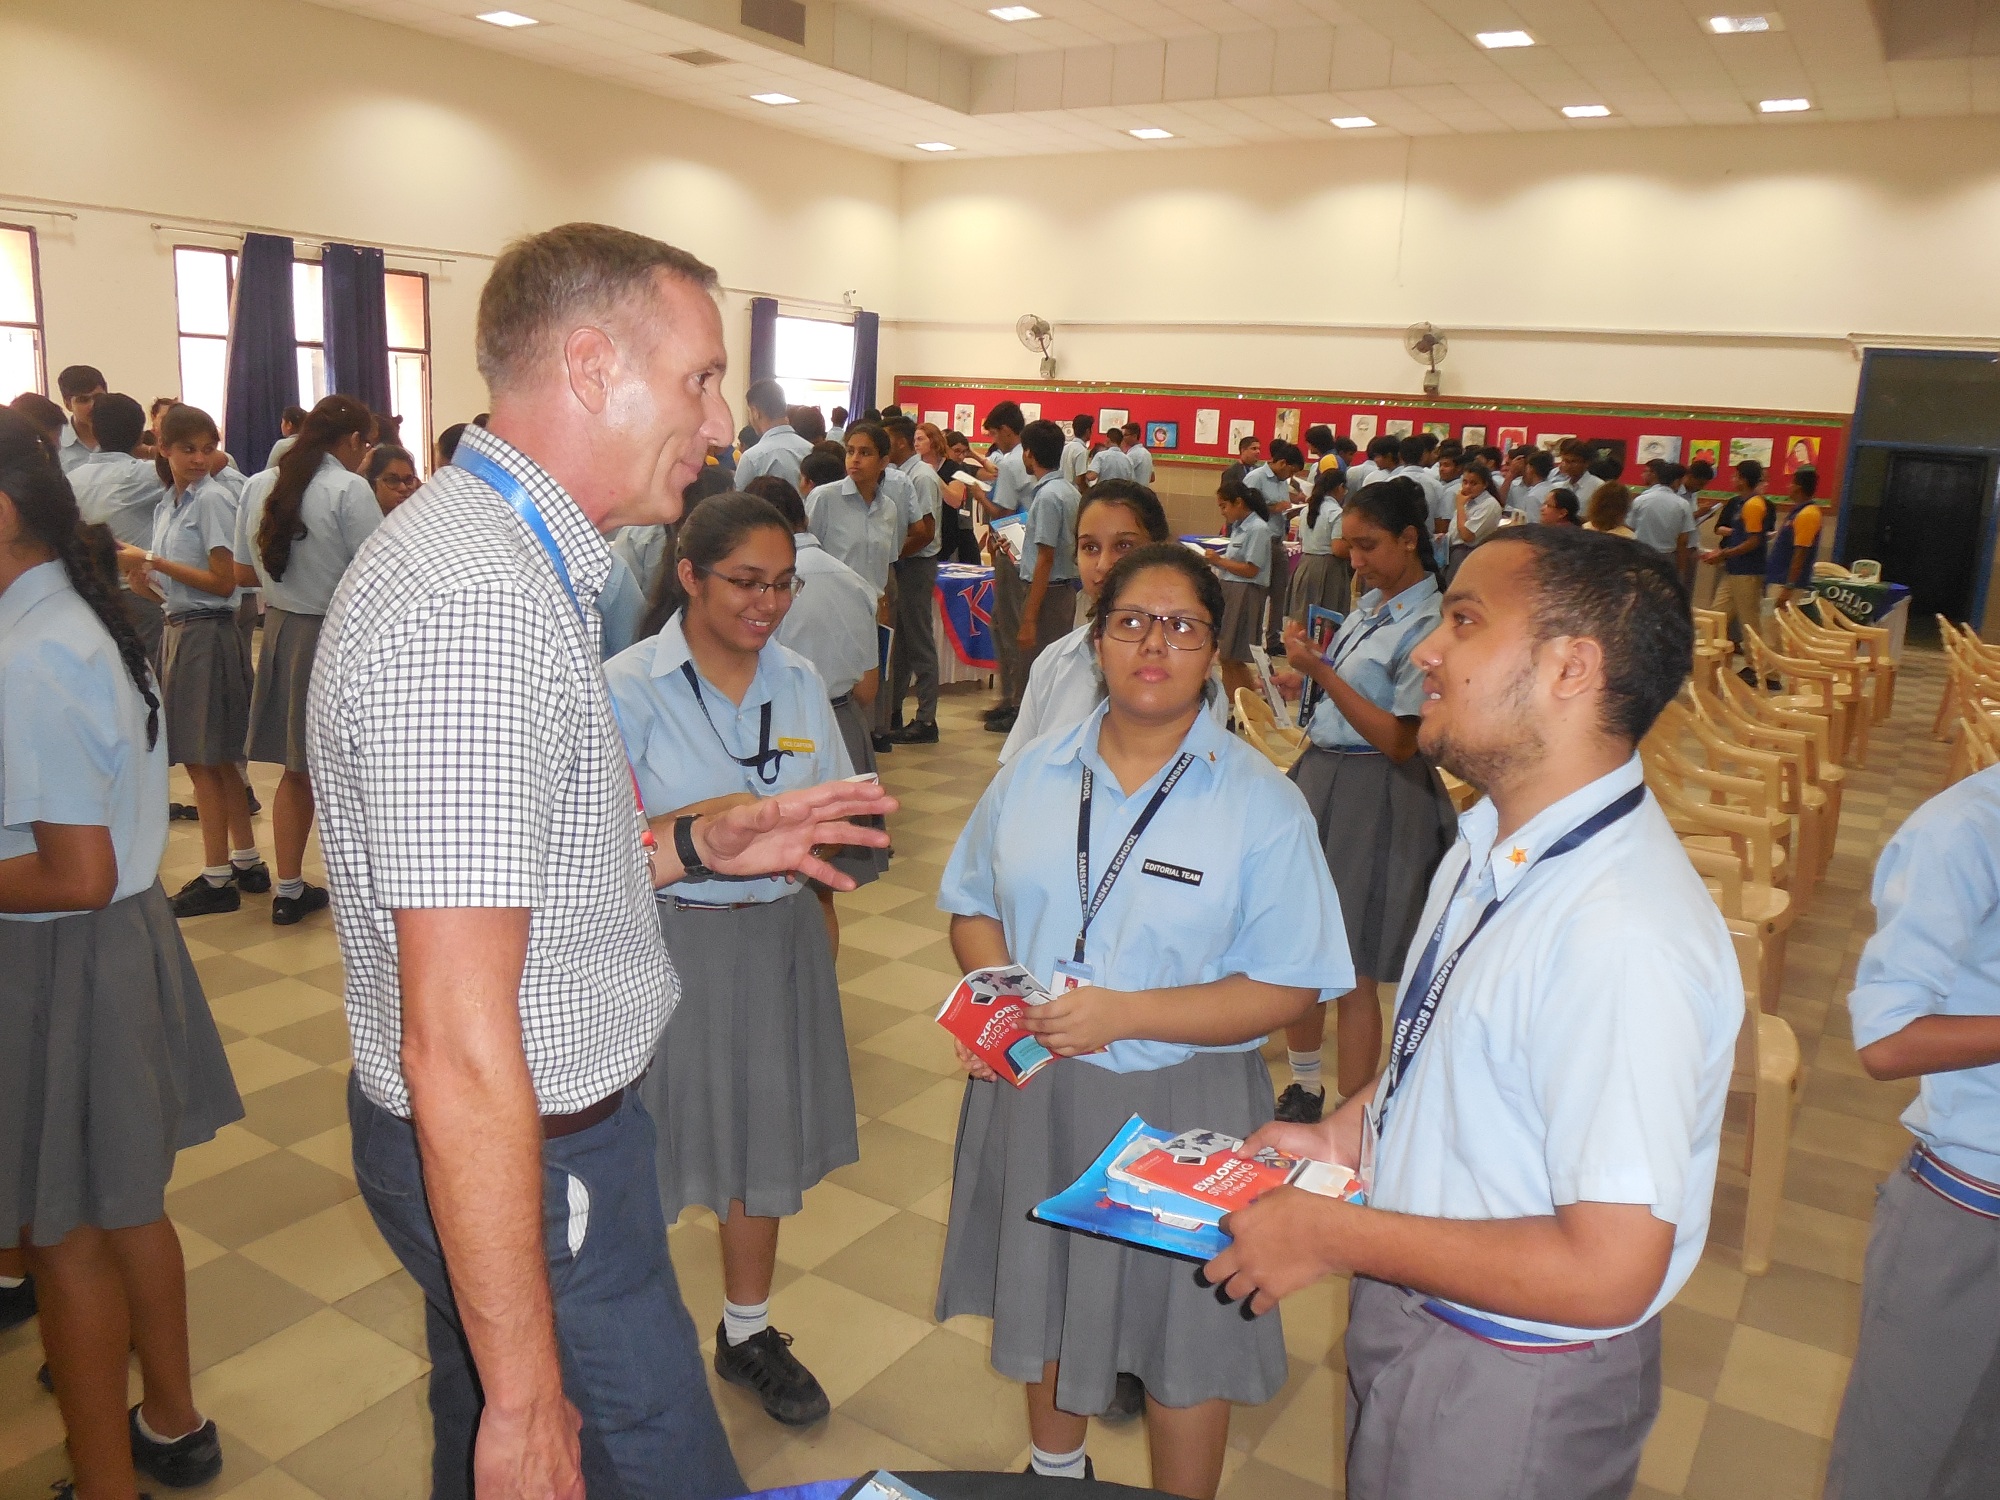 American University Tour held at Sanskar School